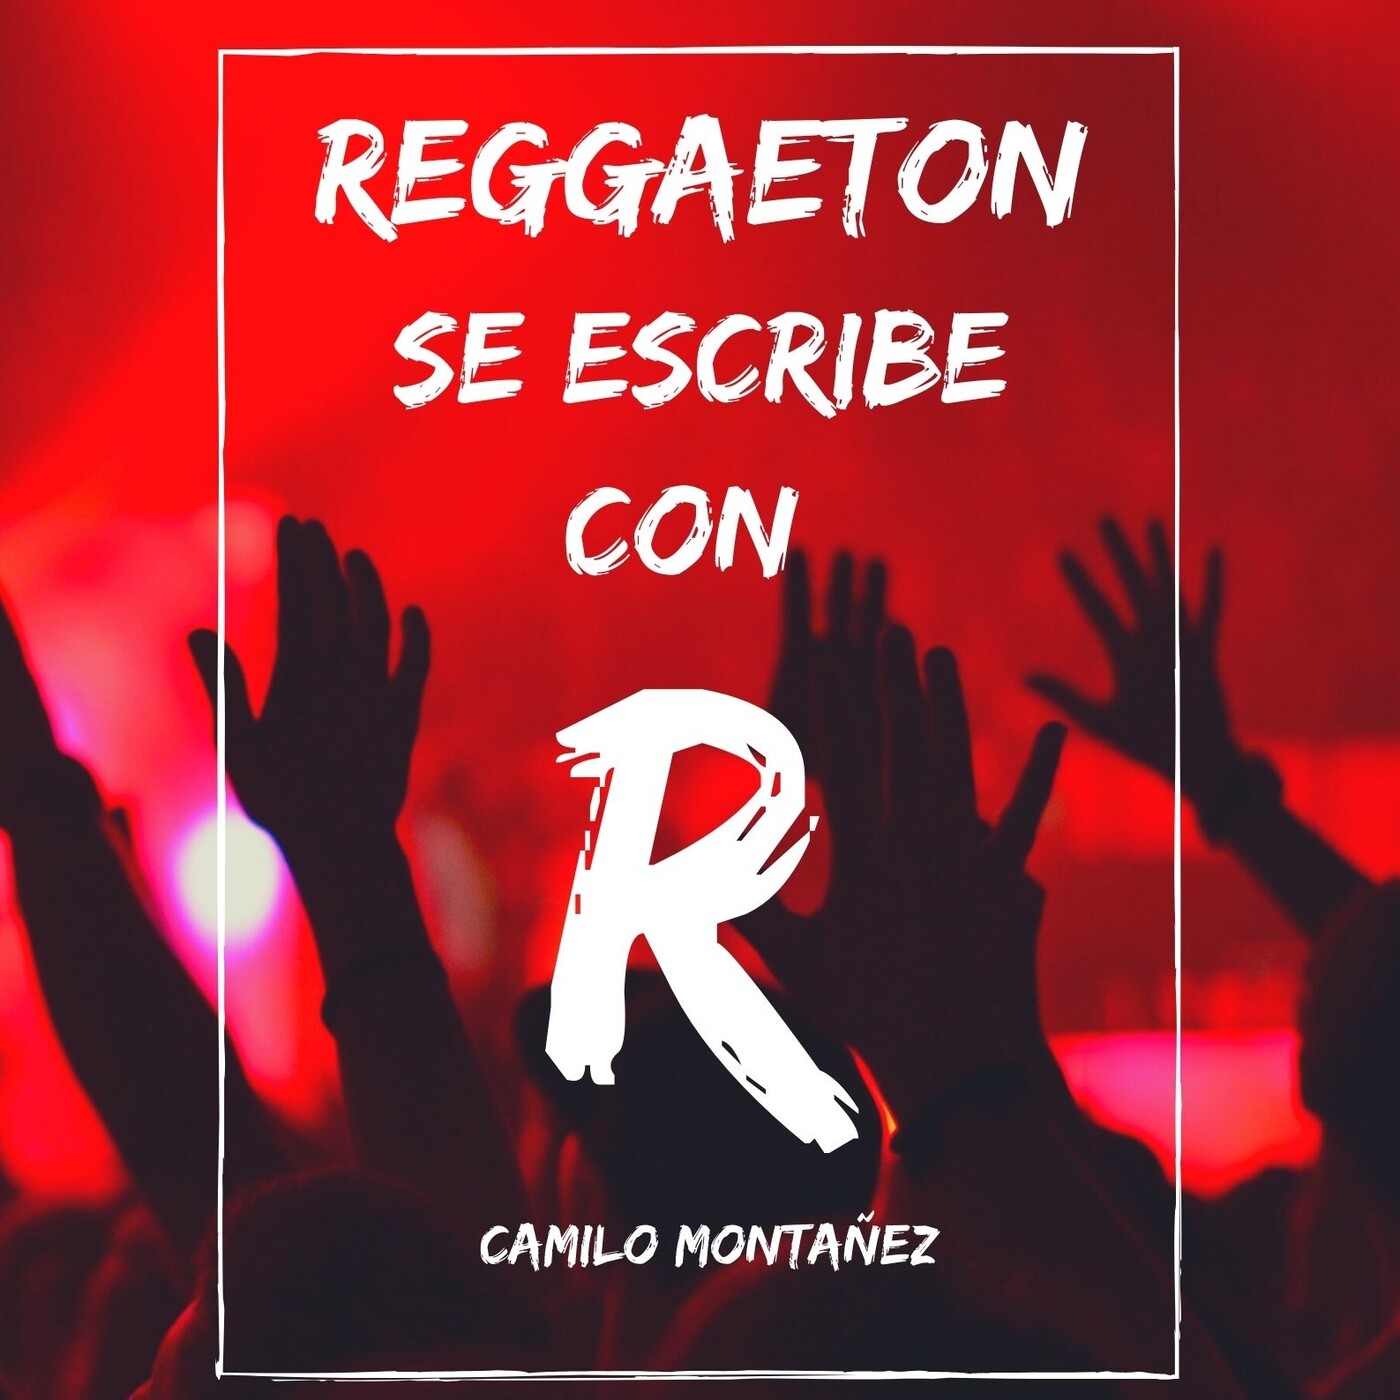 Reggaeton se escribe con R